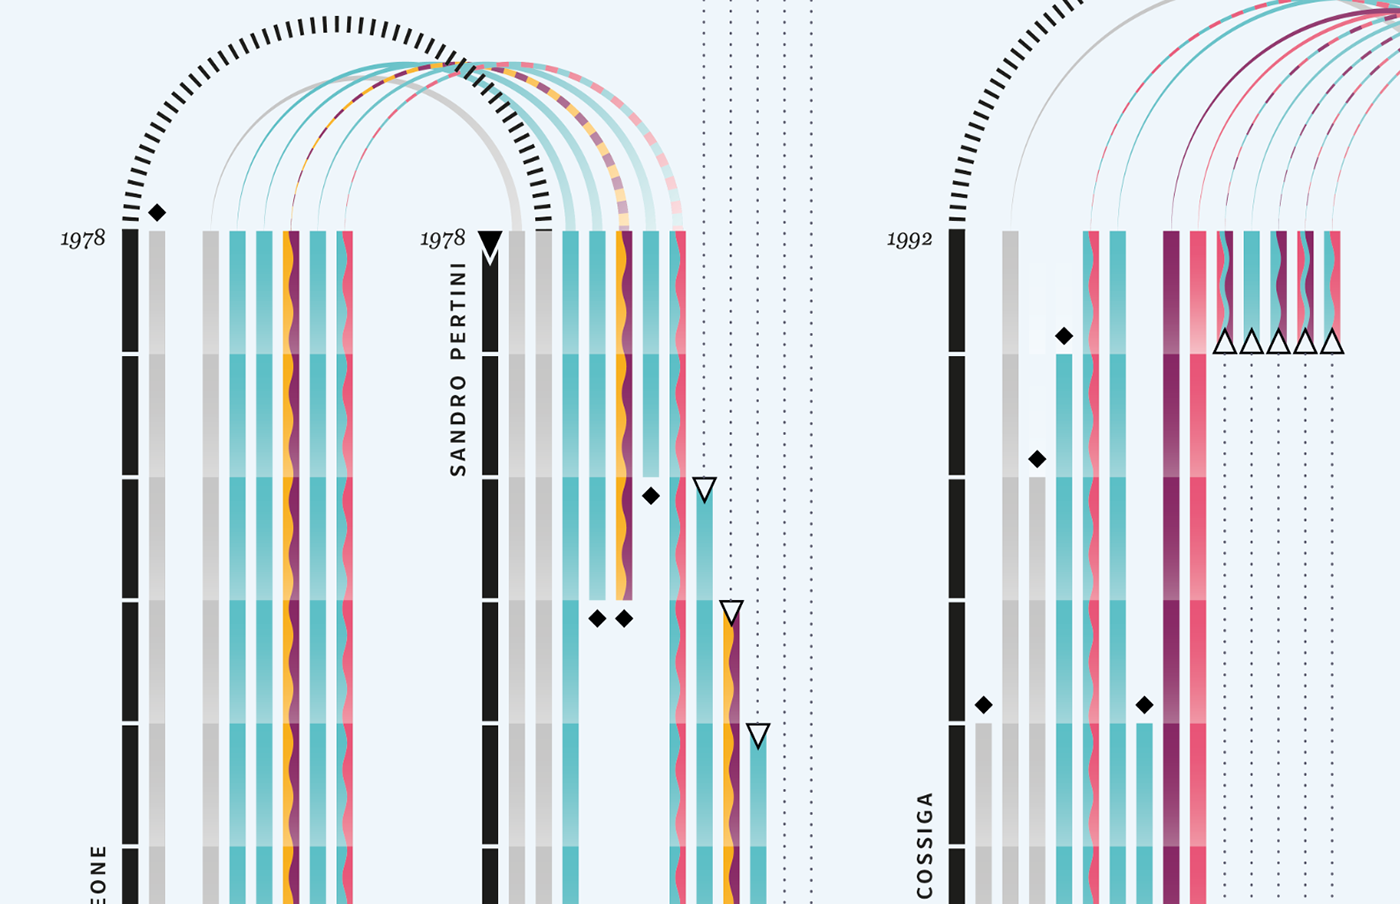 dataviz president senator politic Italy timeline Constitution visualization infographic Election